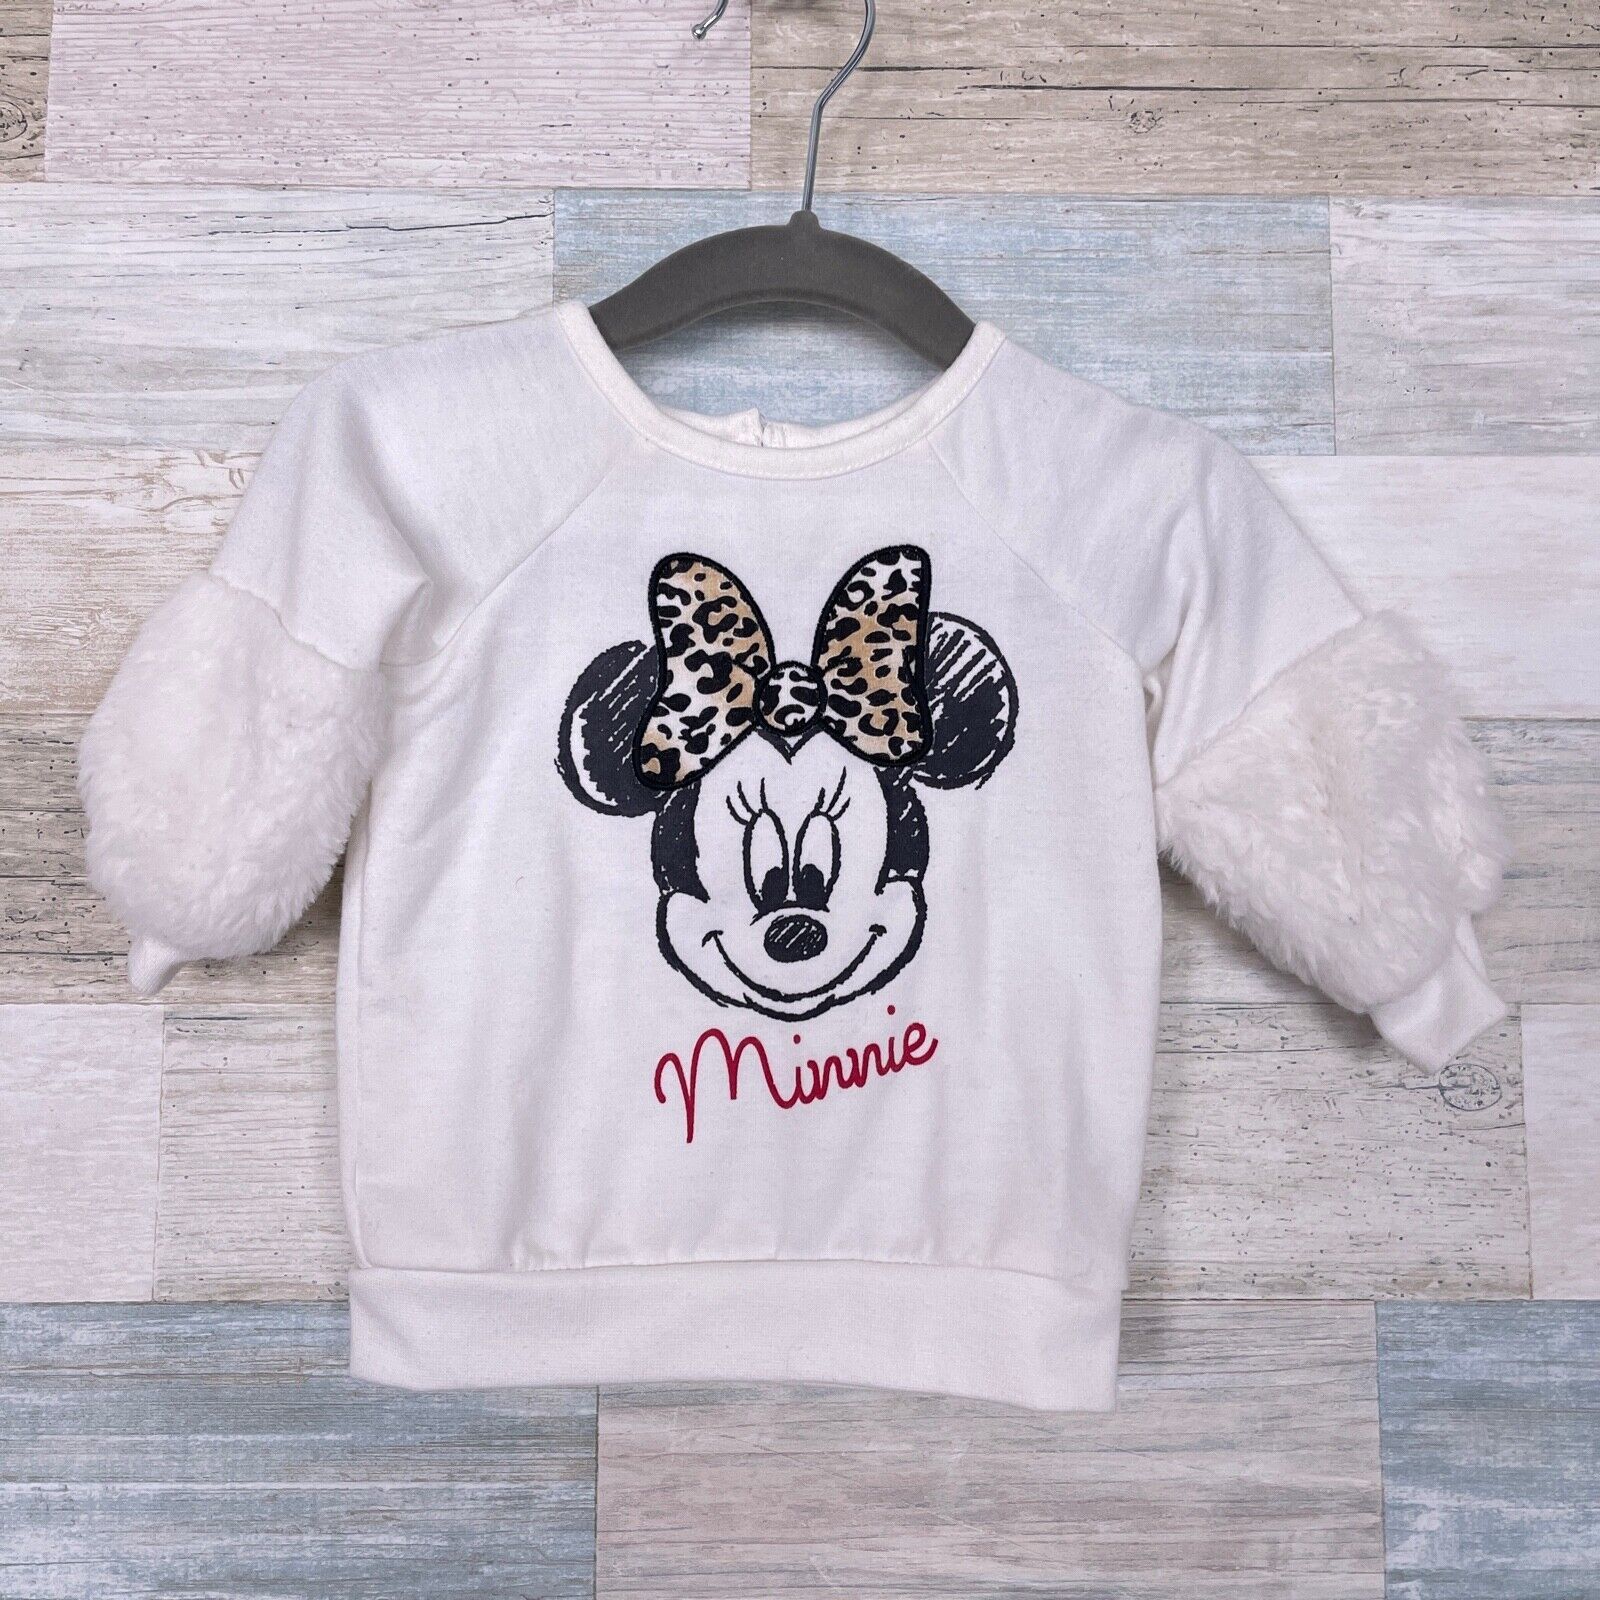 Disney Minnie Mouse Faux Fur Sleeve Raglan Top White Baby Girl 0-3M 0-3 Months - $8.90